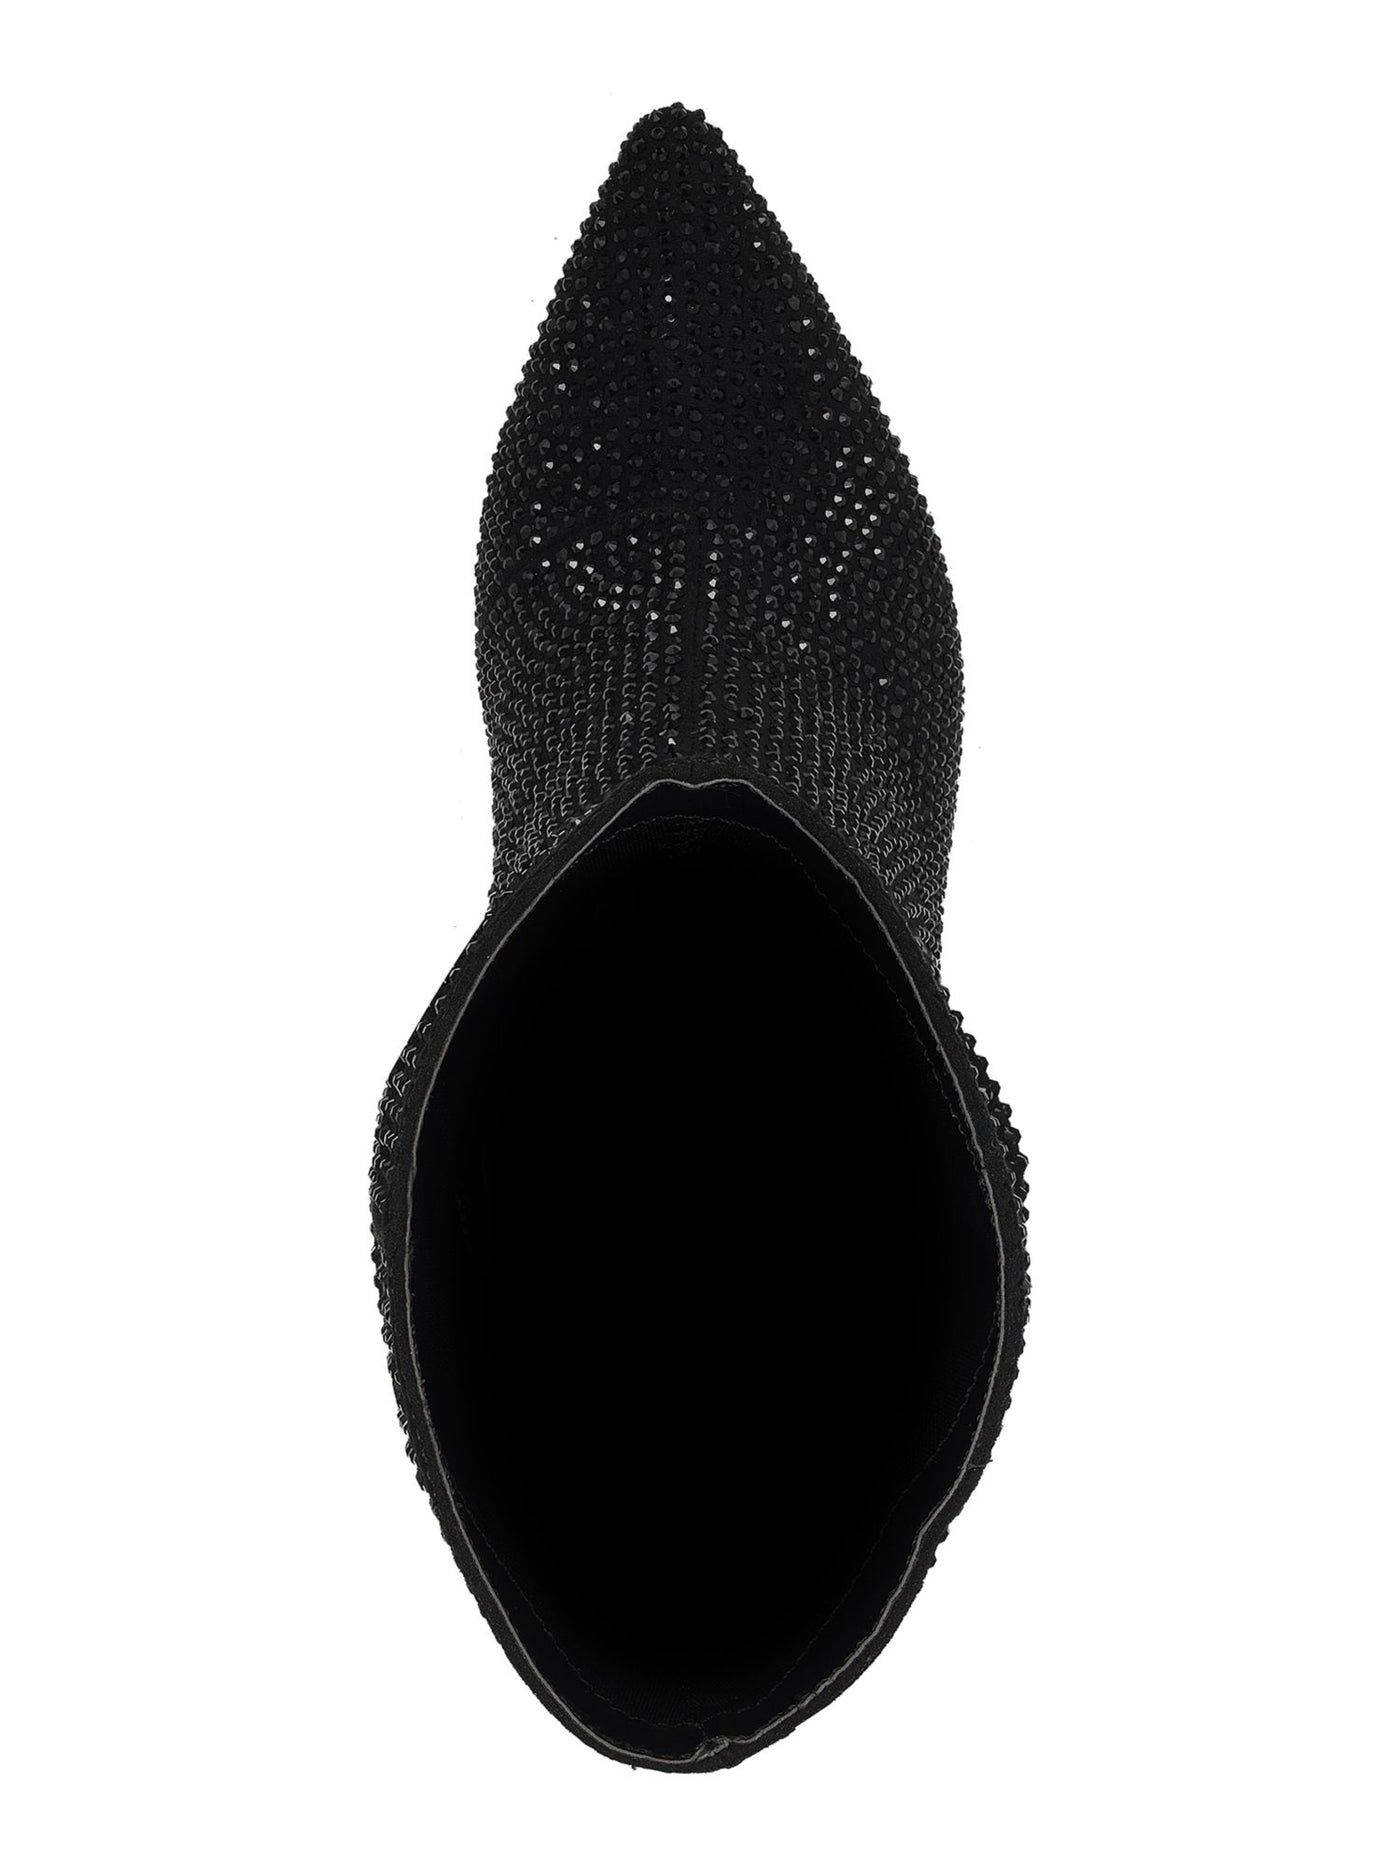 THALIA SODI Womens Black Rhinestone Cushioned Raquell Pointed Toe Stiletto Dress Slouch Boot 7.5 M